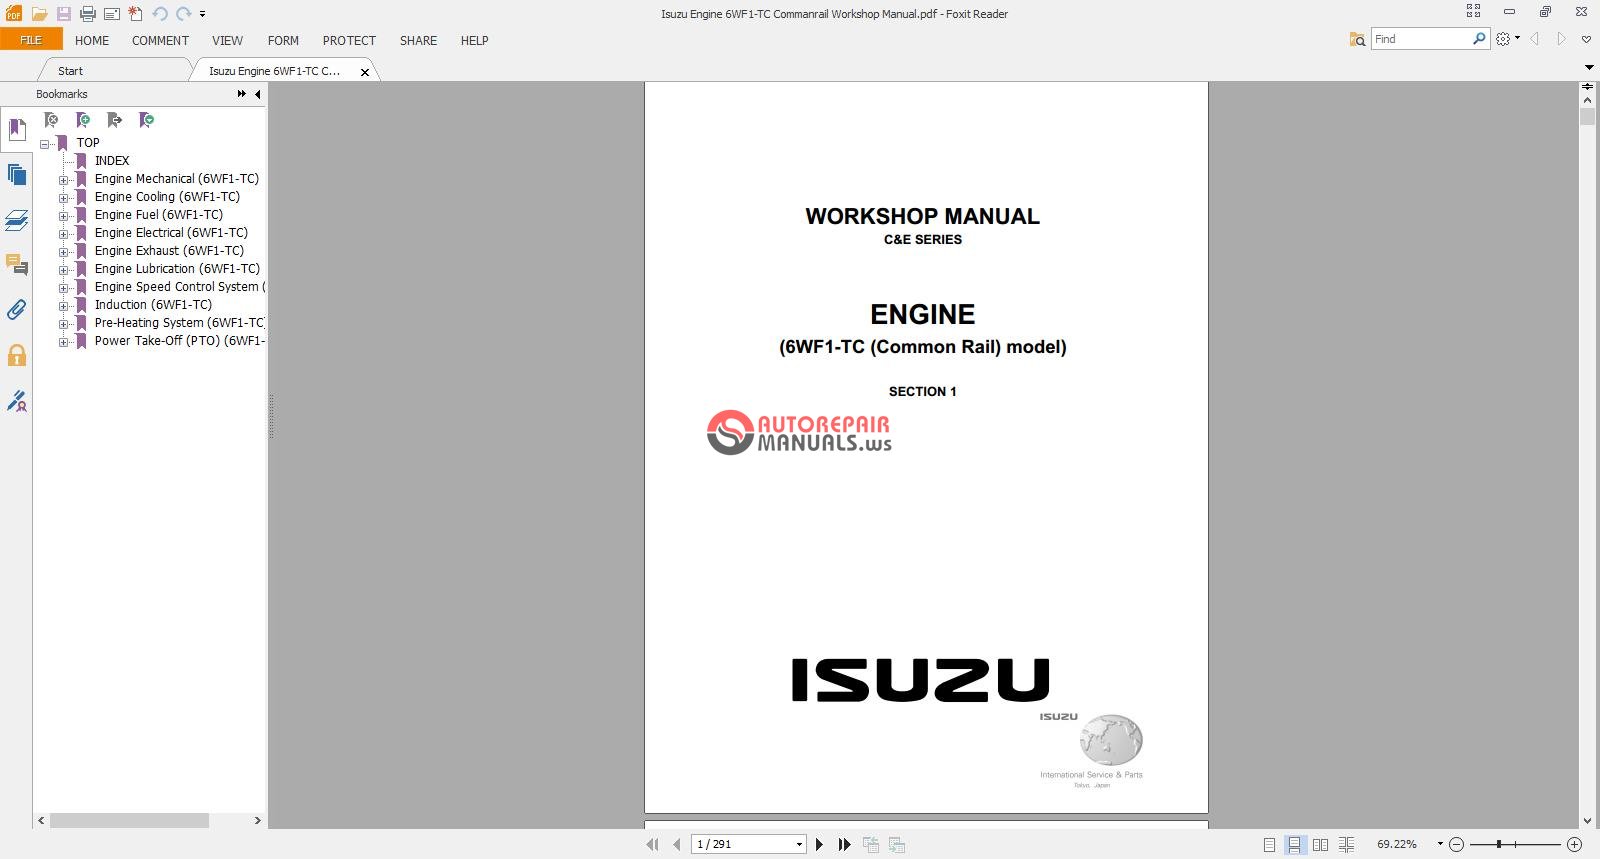 Isuzu Engine 6WF1-TC Commanrail Workshop Manual | Auto ...